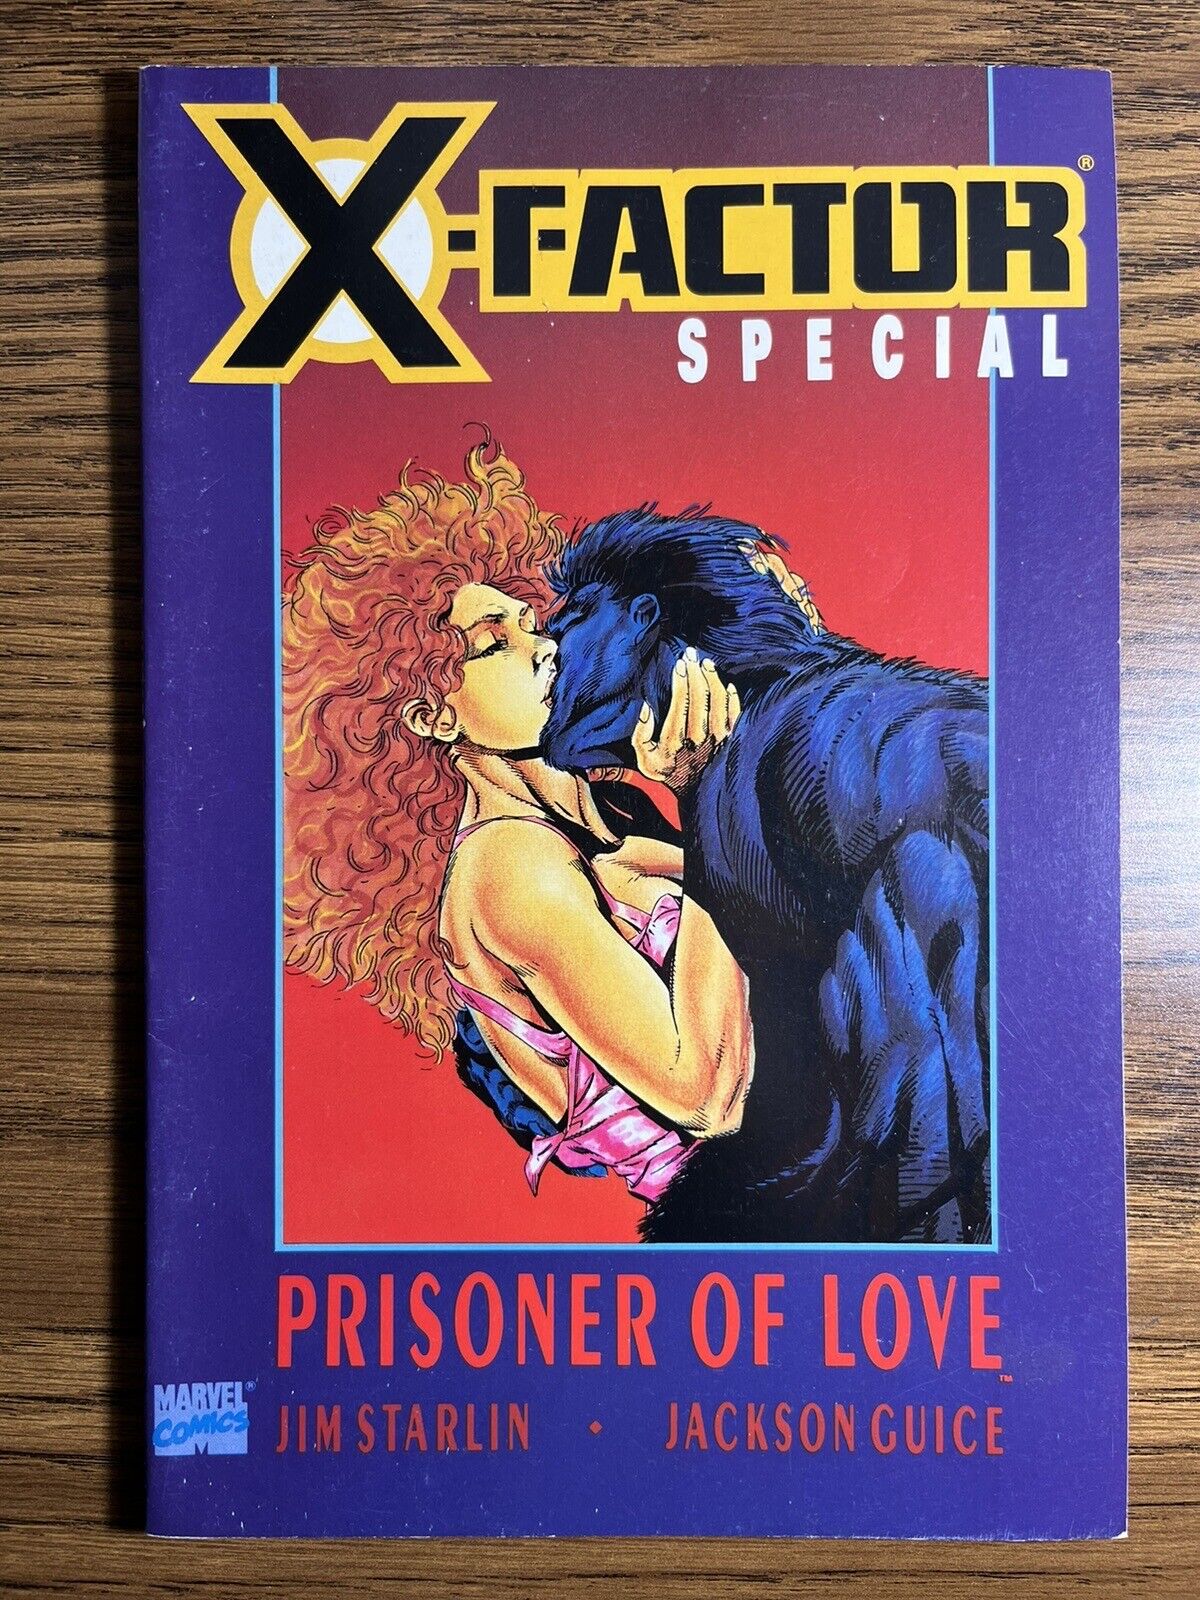 X-FACTOR SPECIAL PRISONER OF LOVE 1 TPB JIM STARLIN STORY MARVEL COMICS 1990 A